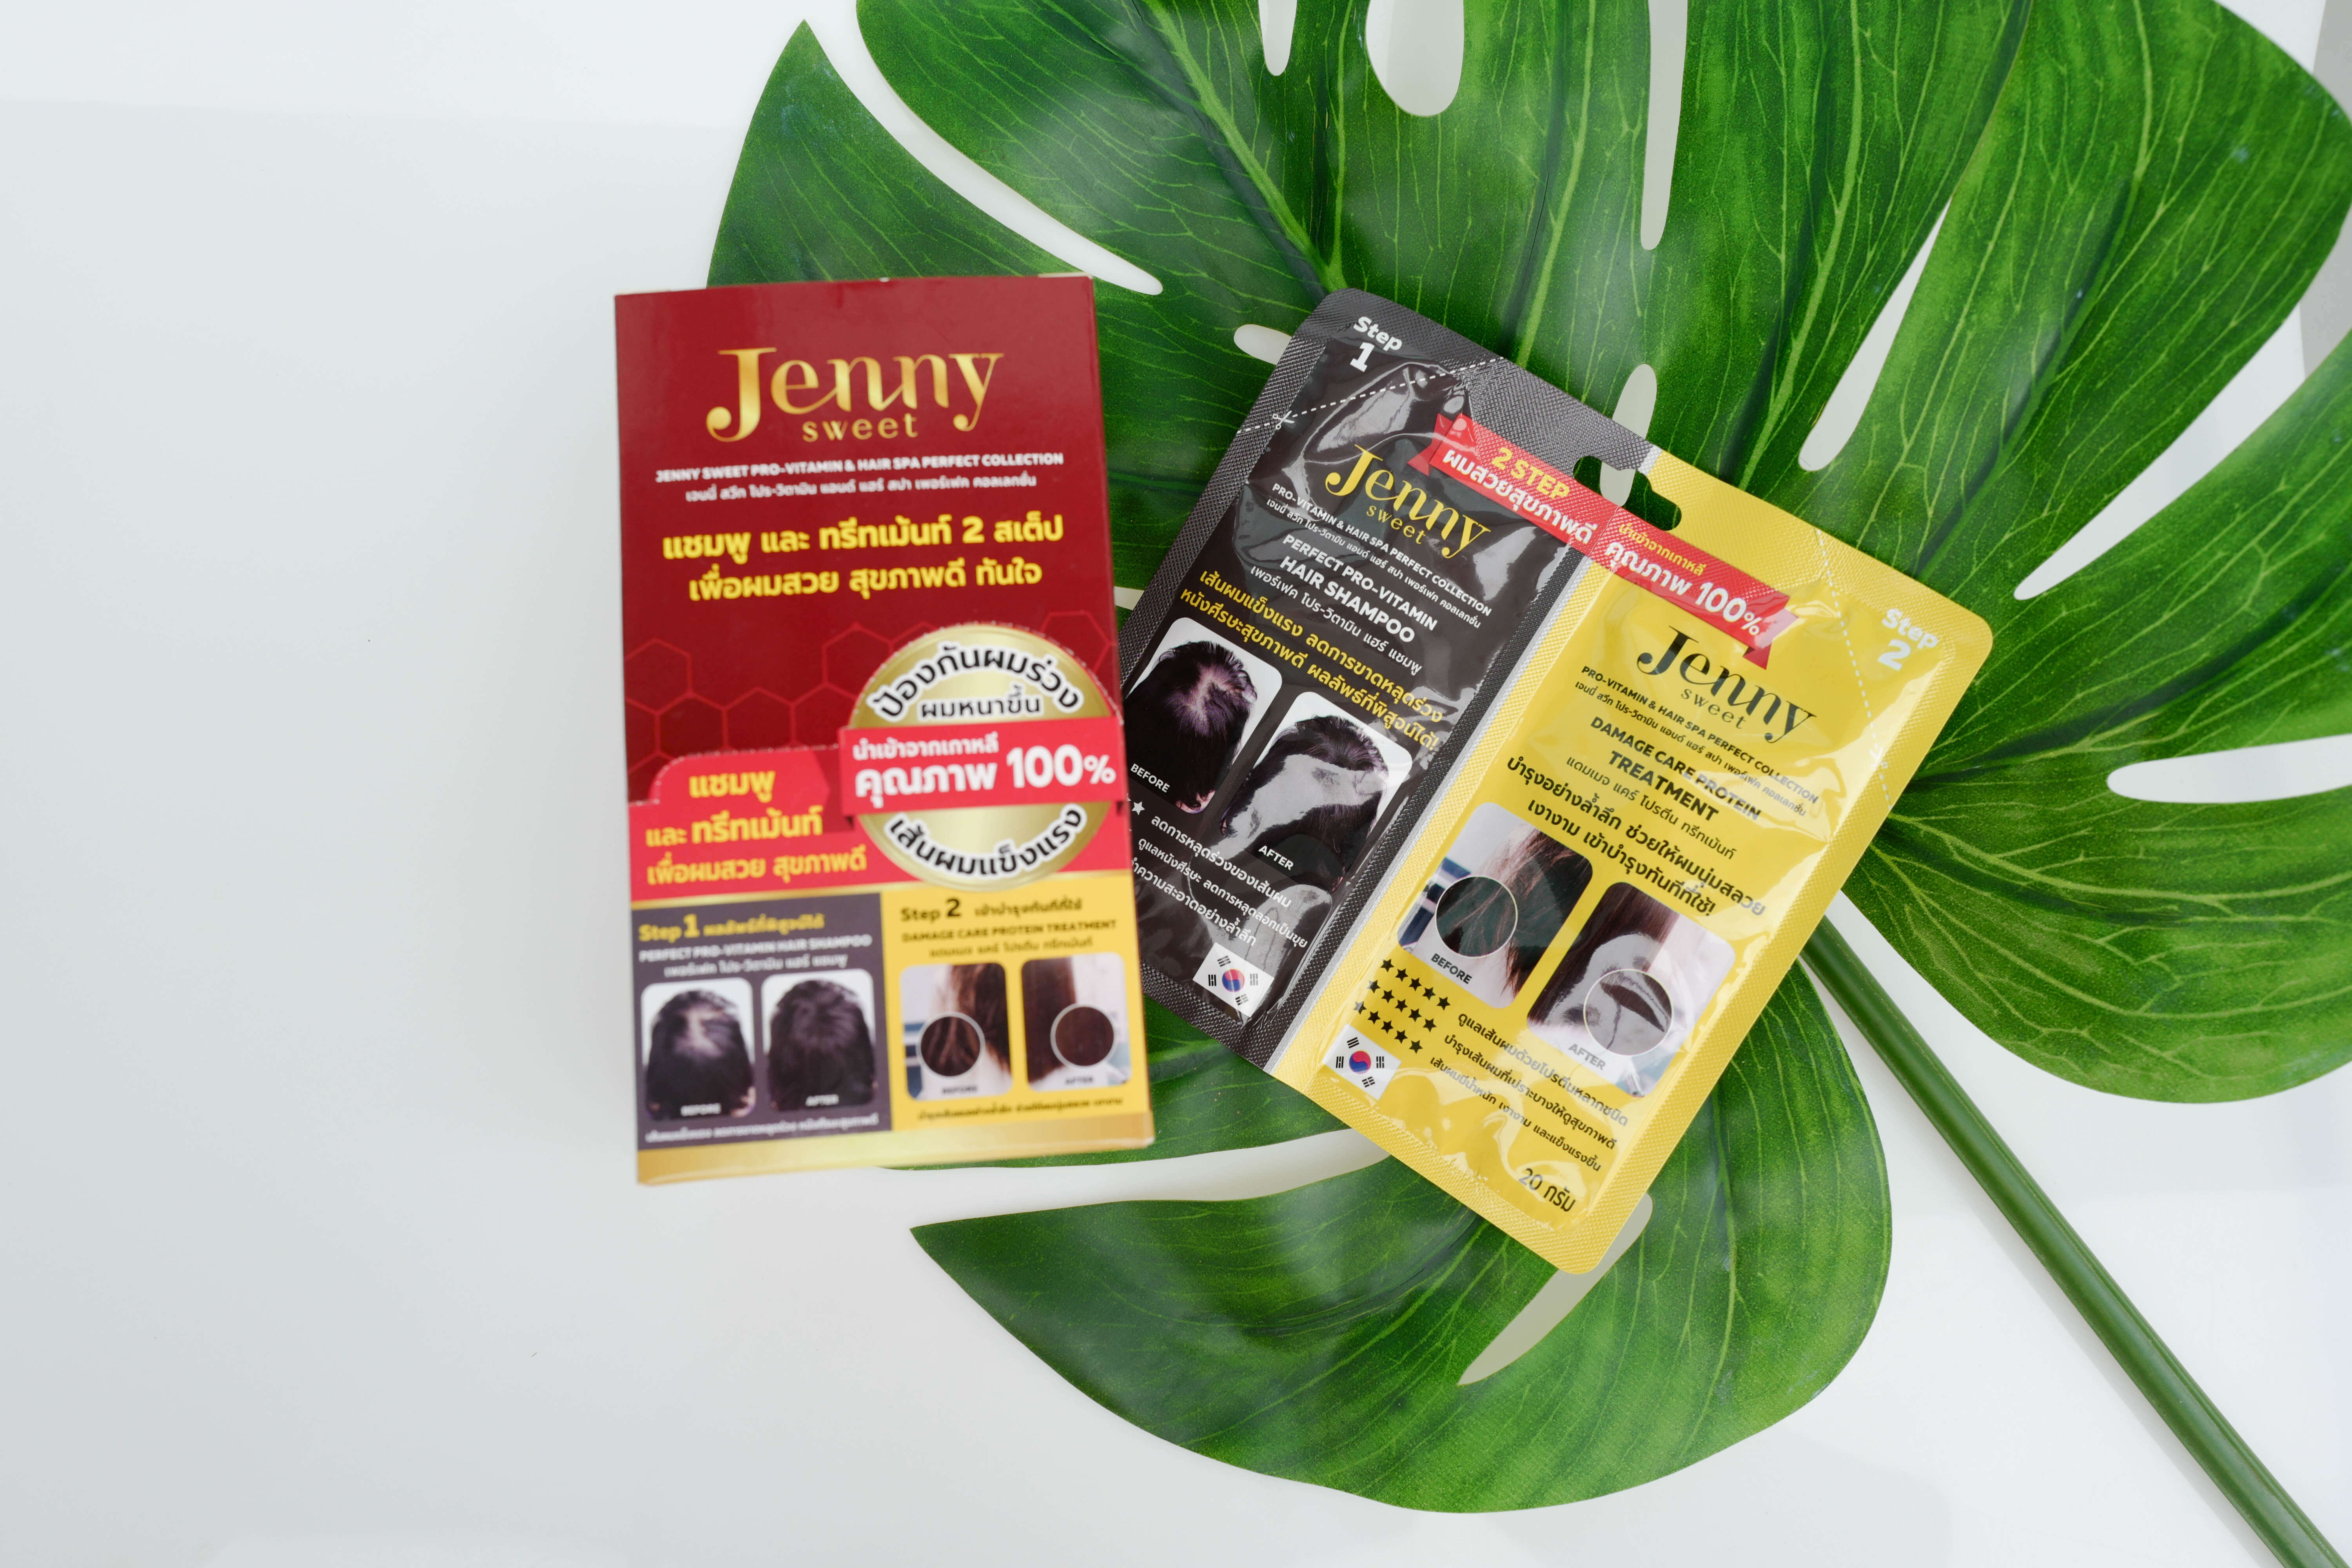 JENNY SWEET Pro-Vitamin & Hair Spa Perfect Collection,jenny sweet รีวิว ,jenny sweet ราคา,ผลิตภัณฑ์ทำความสะอาดเส้นผมและหนังศีรษะ